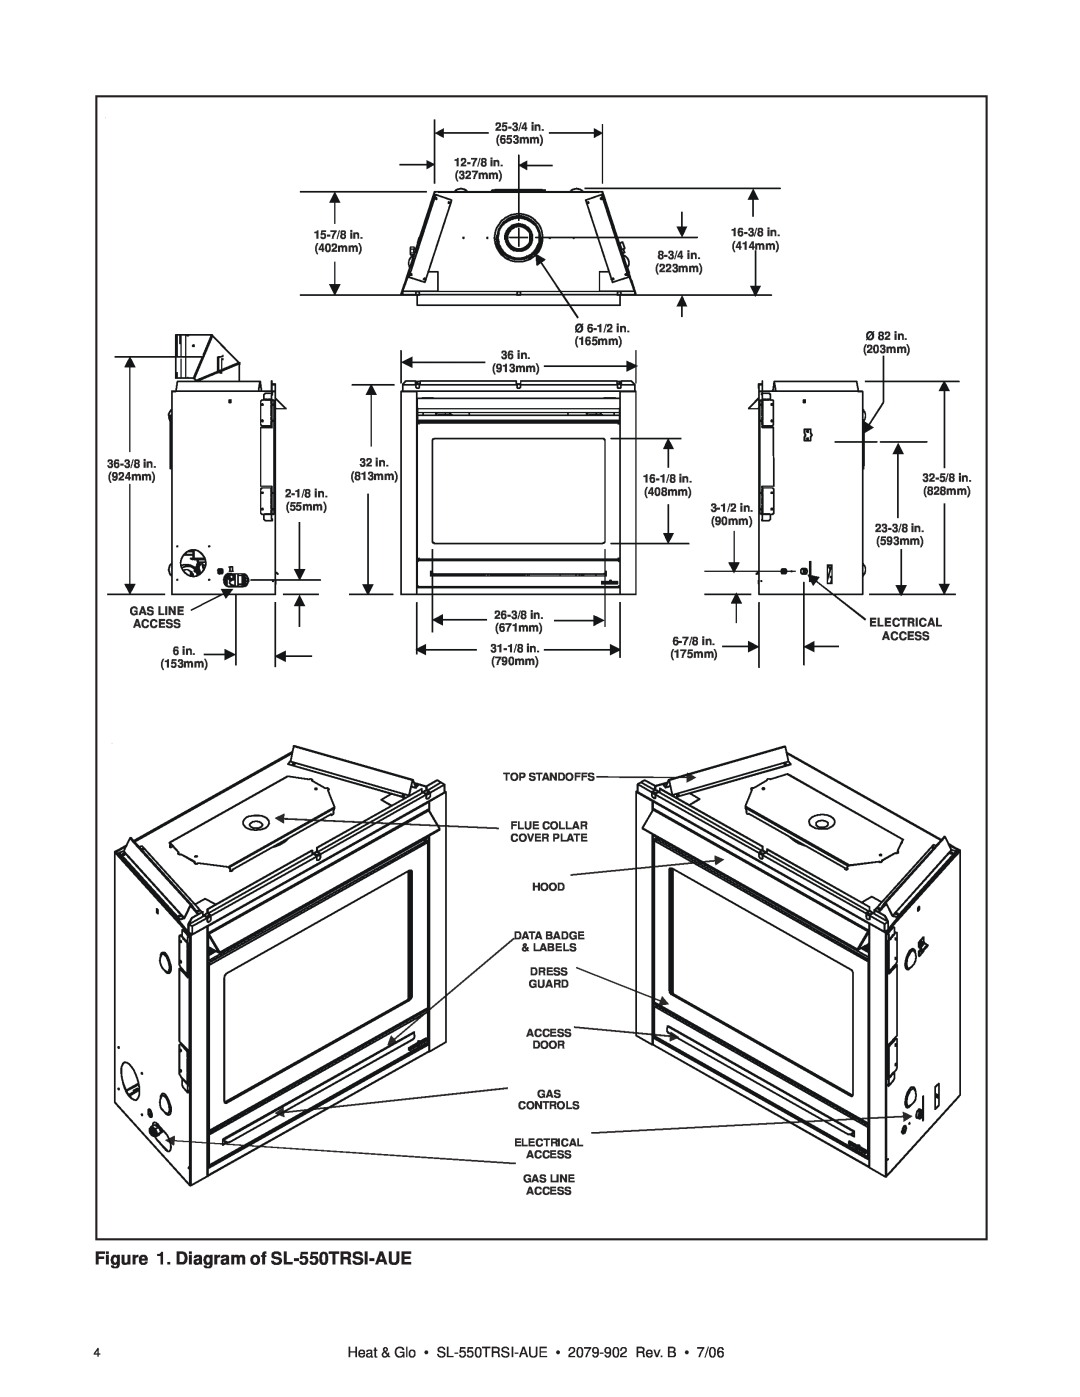 Hearth and Home Technologies manual Diagram of SL-550TRSI-AUE, Heat & Glo SL-550TRSI-AUE 2079-902 Rev. B 7/06 